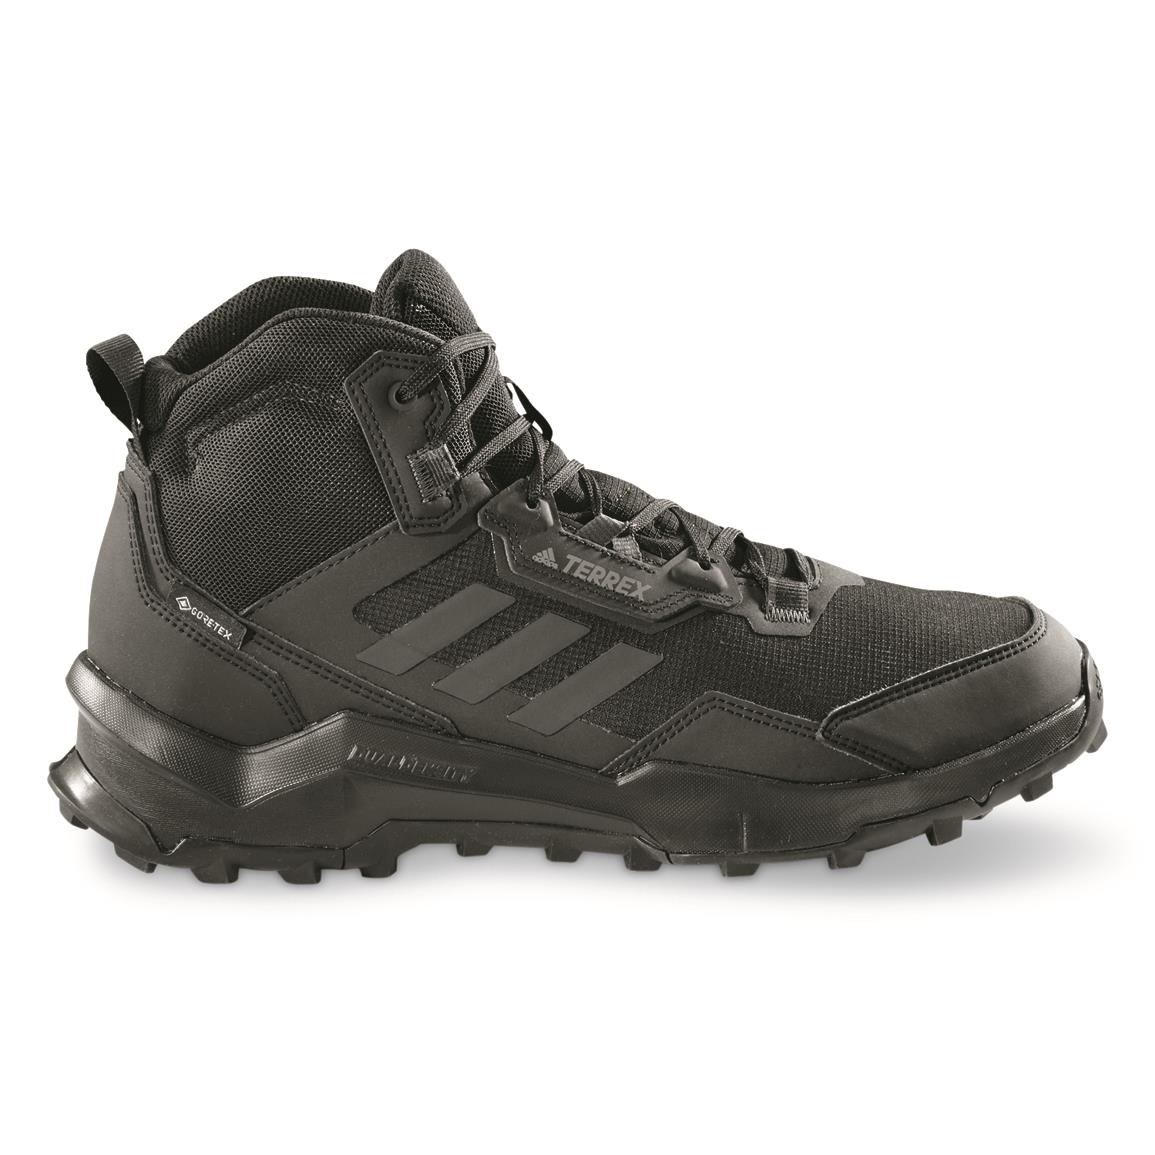 Northside Men's Hargrove Mid Waterproof Hiking Boots - 730236, Hiking ...